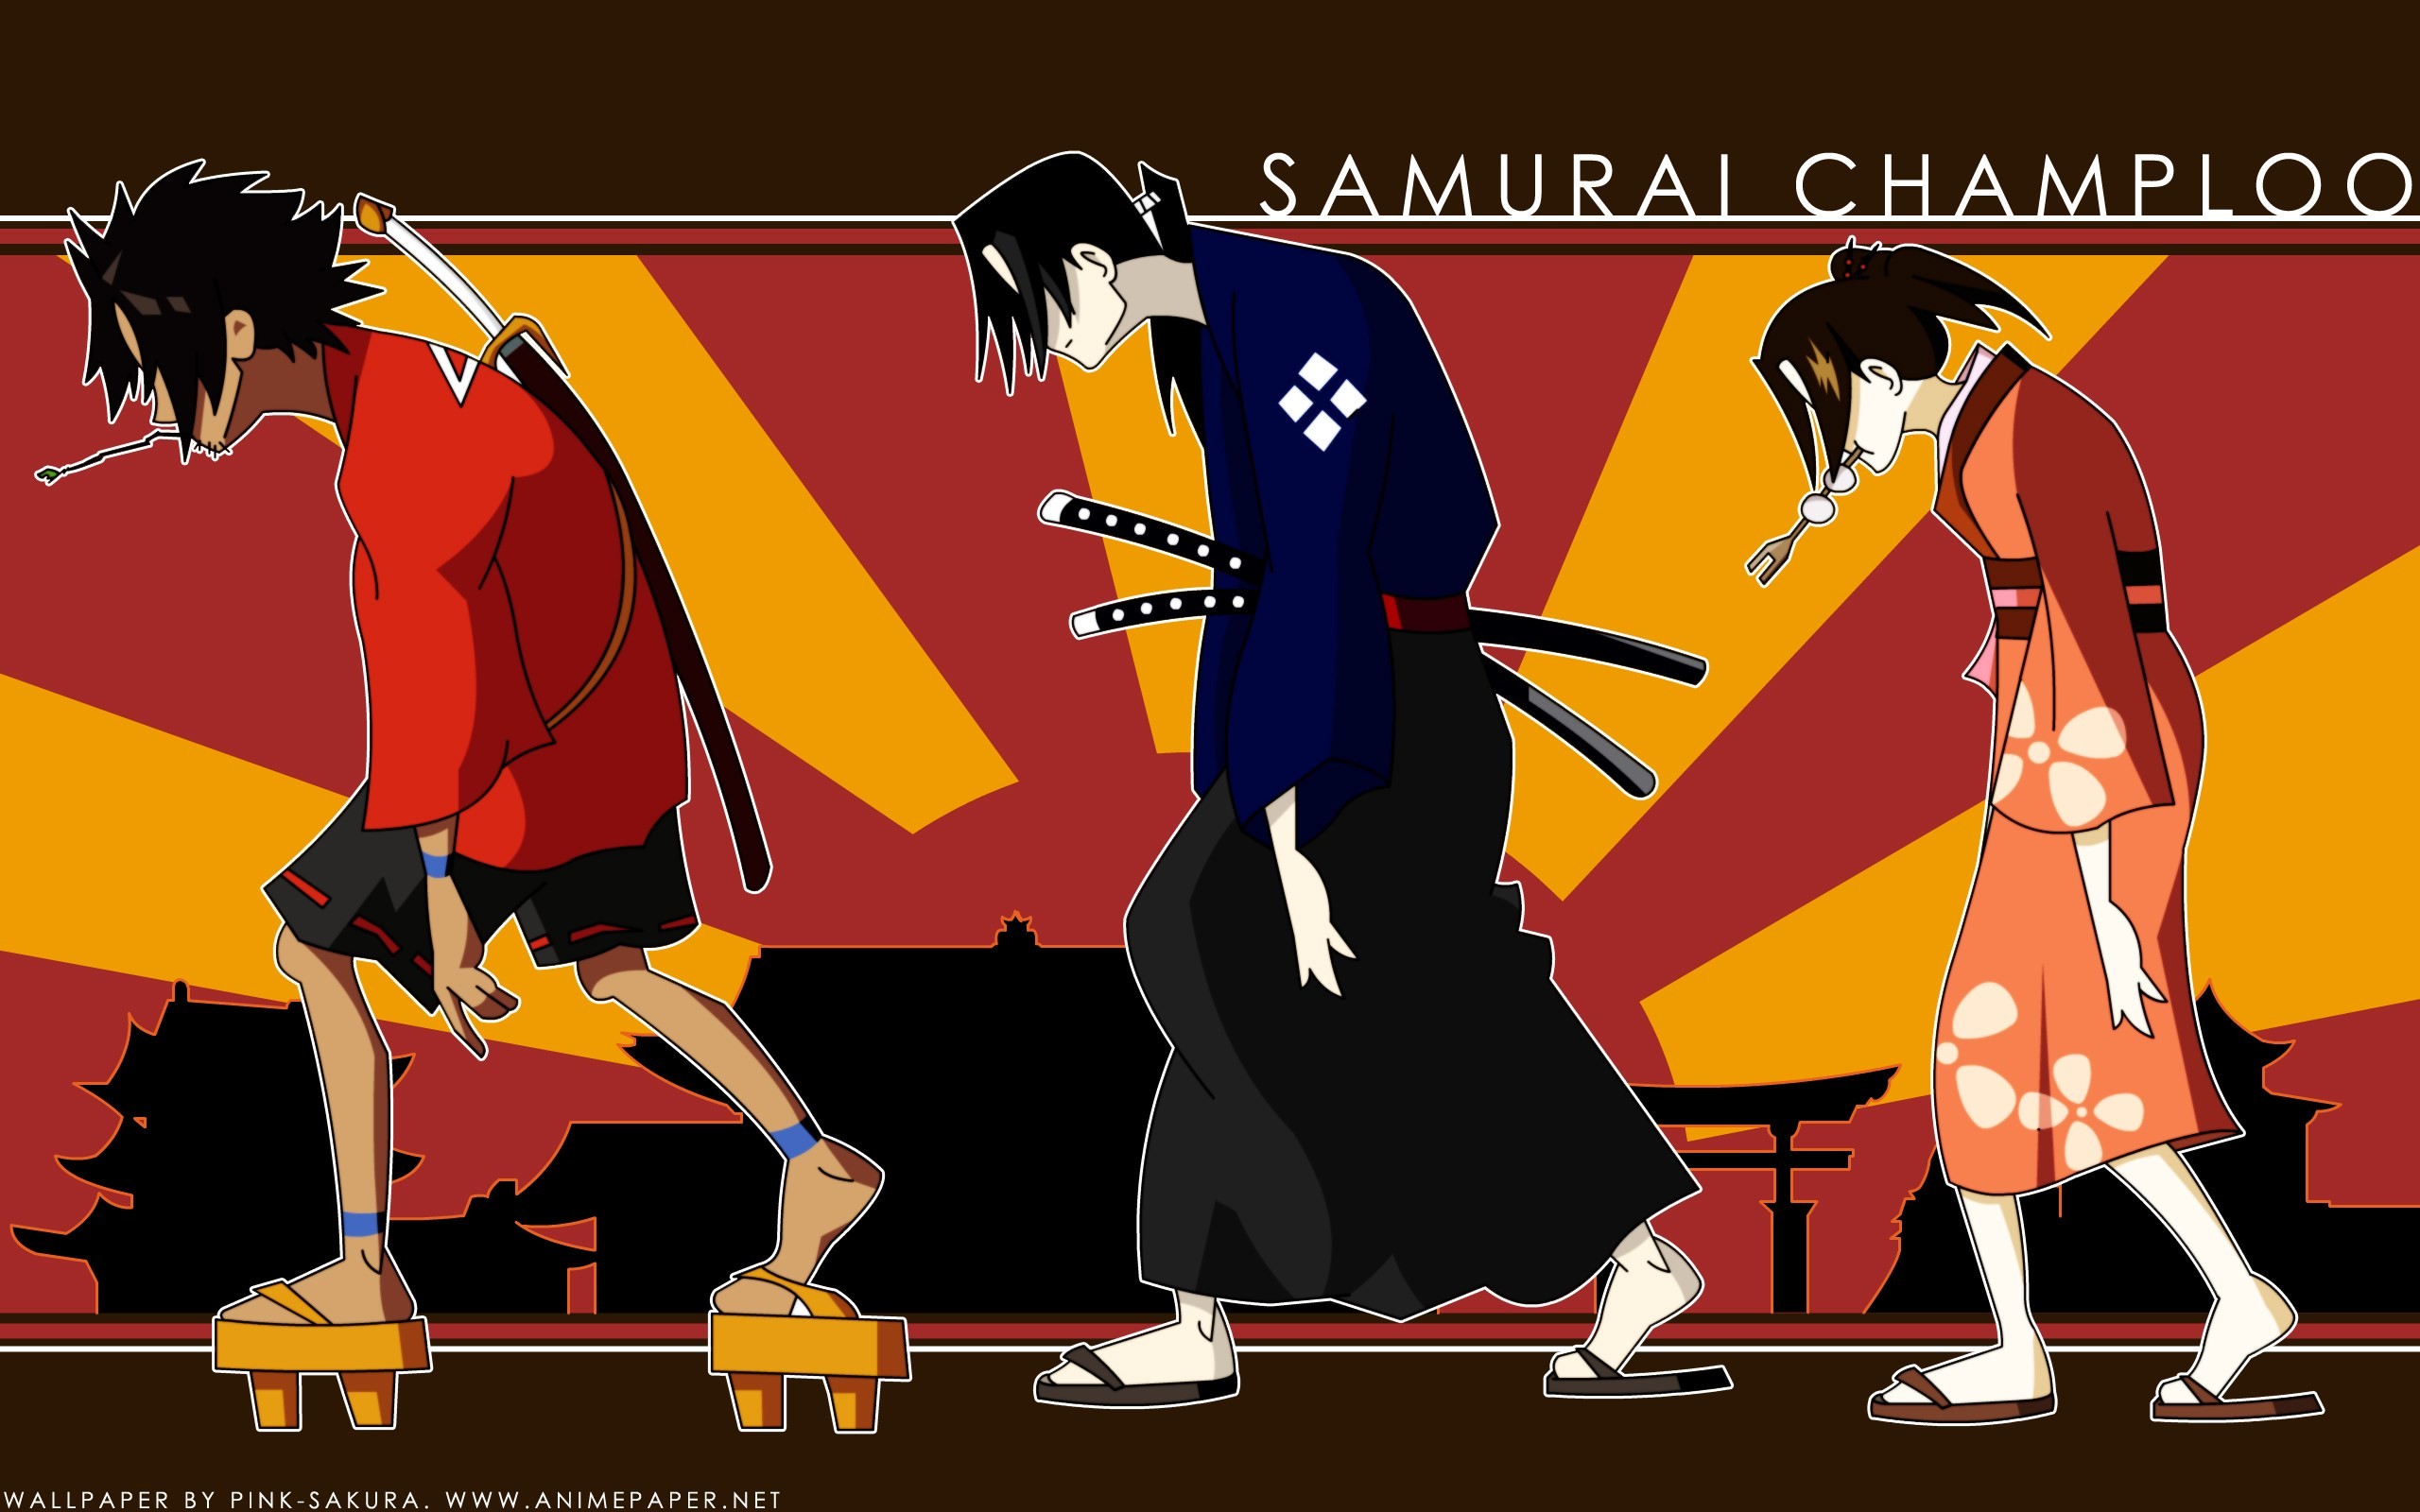 #1856610, samurai champloo category – hd wallpaper samurai champloo